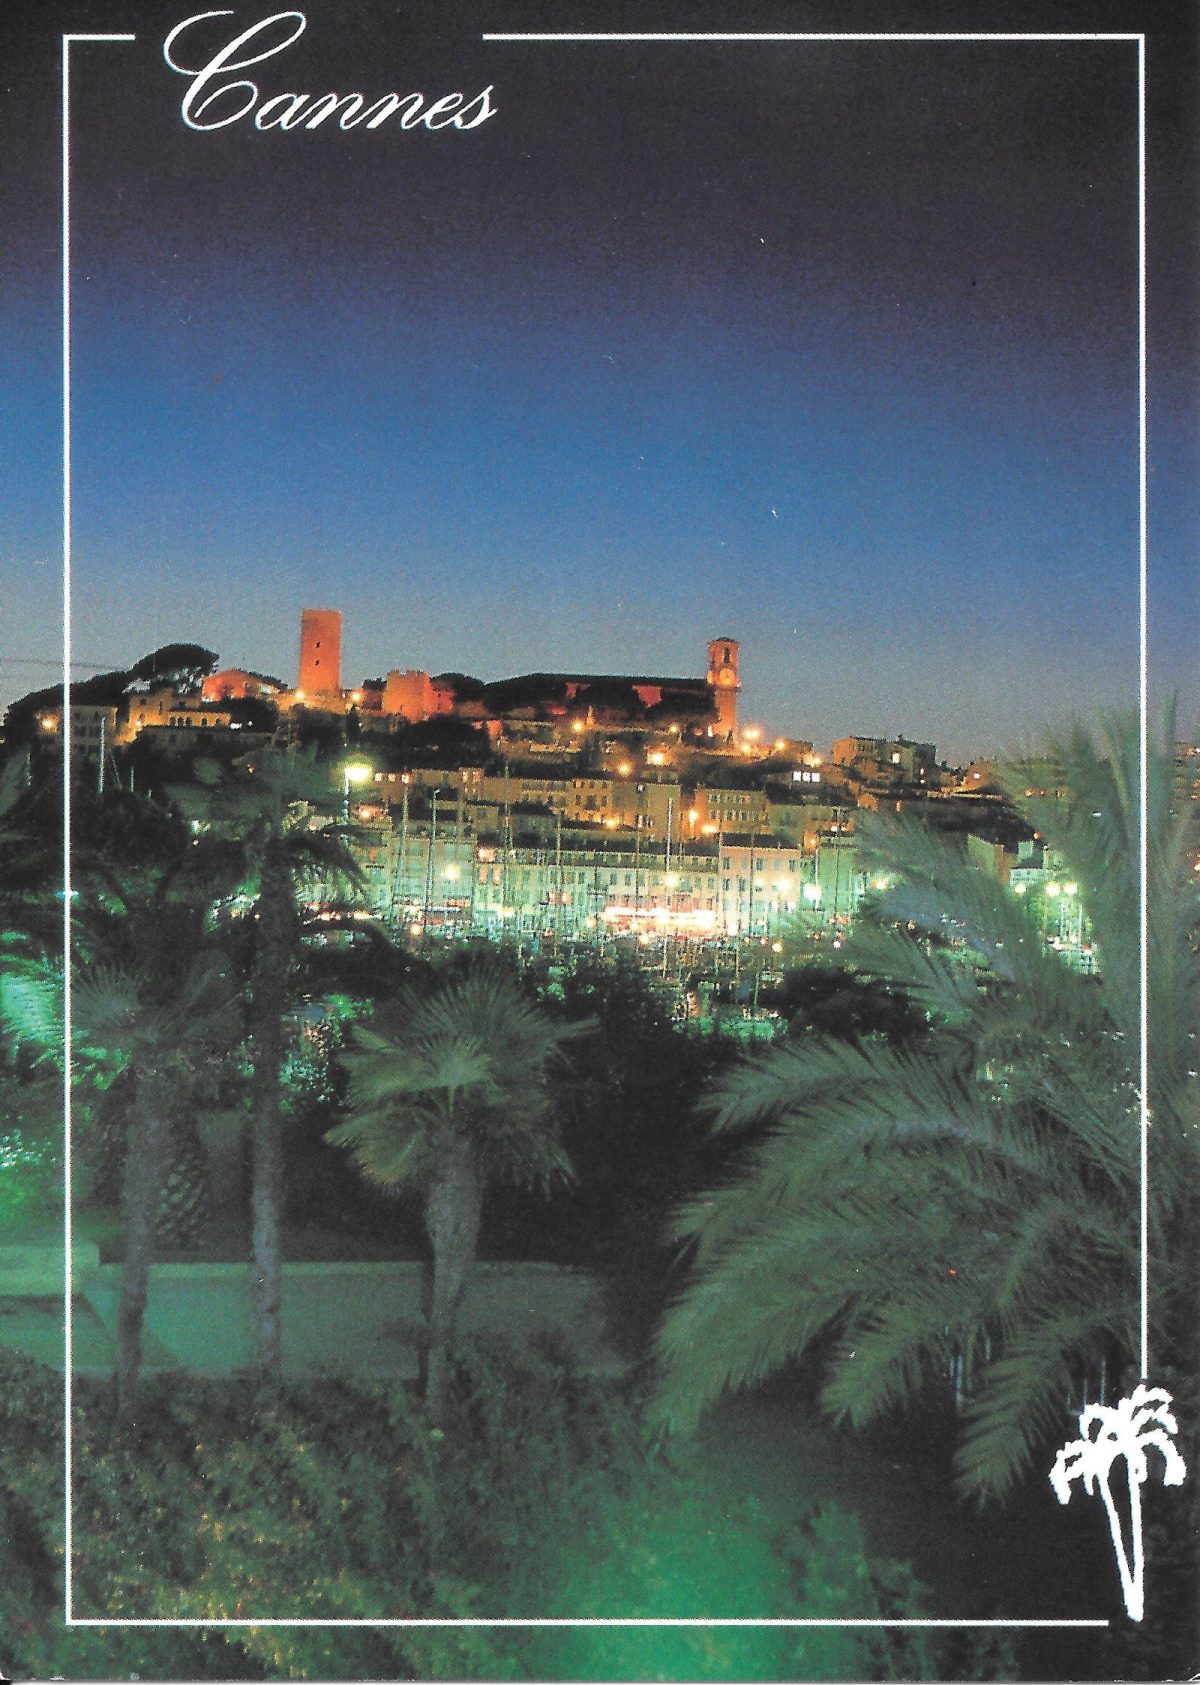 Cannes, Postcards, correspondence, photography, design